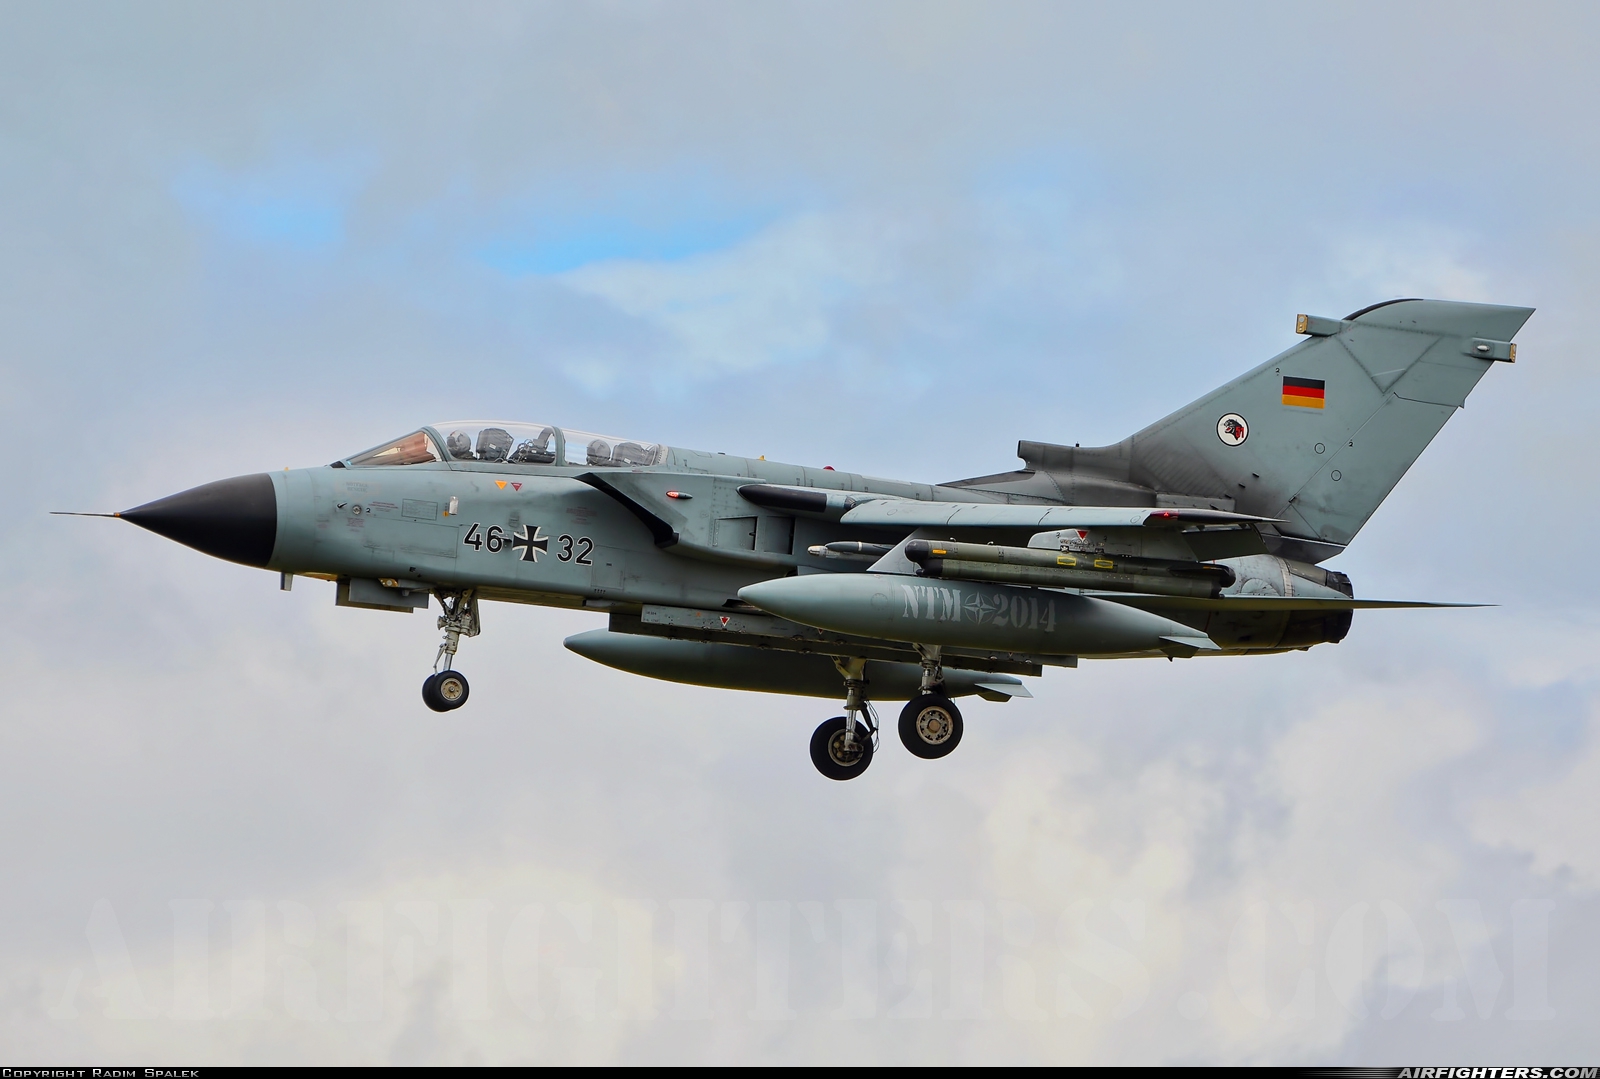 Germany - Air Force Panavia Tornado ECR 46+32 at Schleswig (- Jagel) (WBG / ETNS), Germany